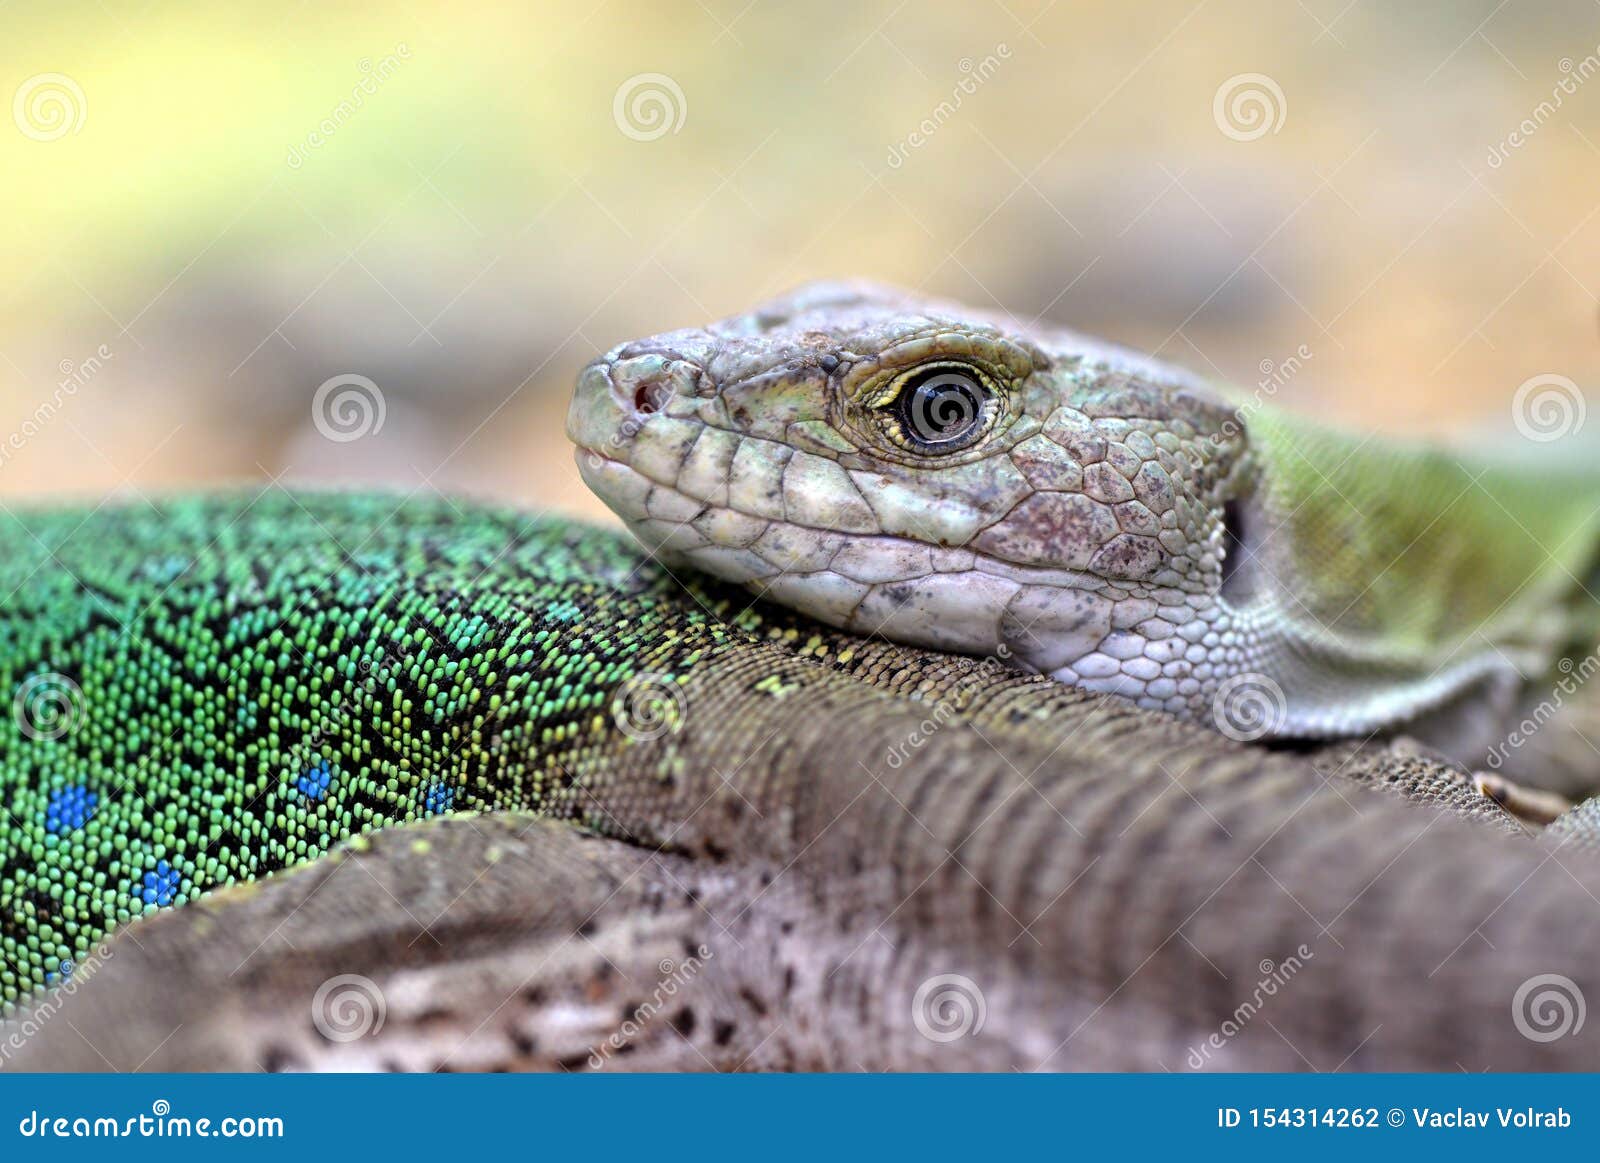 moroccan eyed lizard - timon tangitanus. lizard in the family lacertidae.